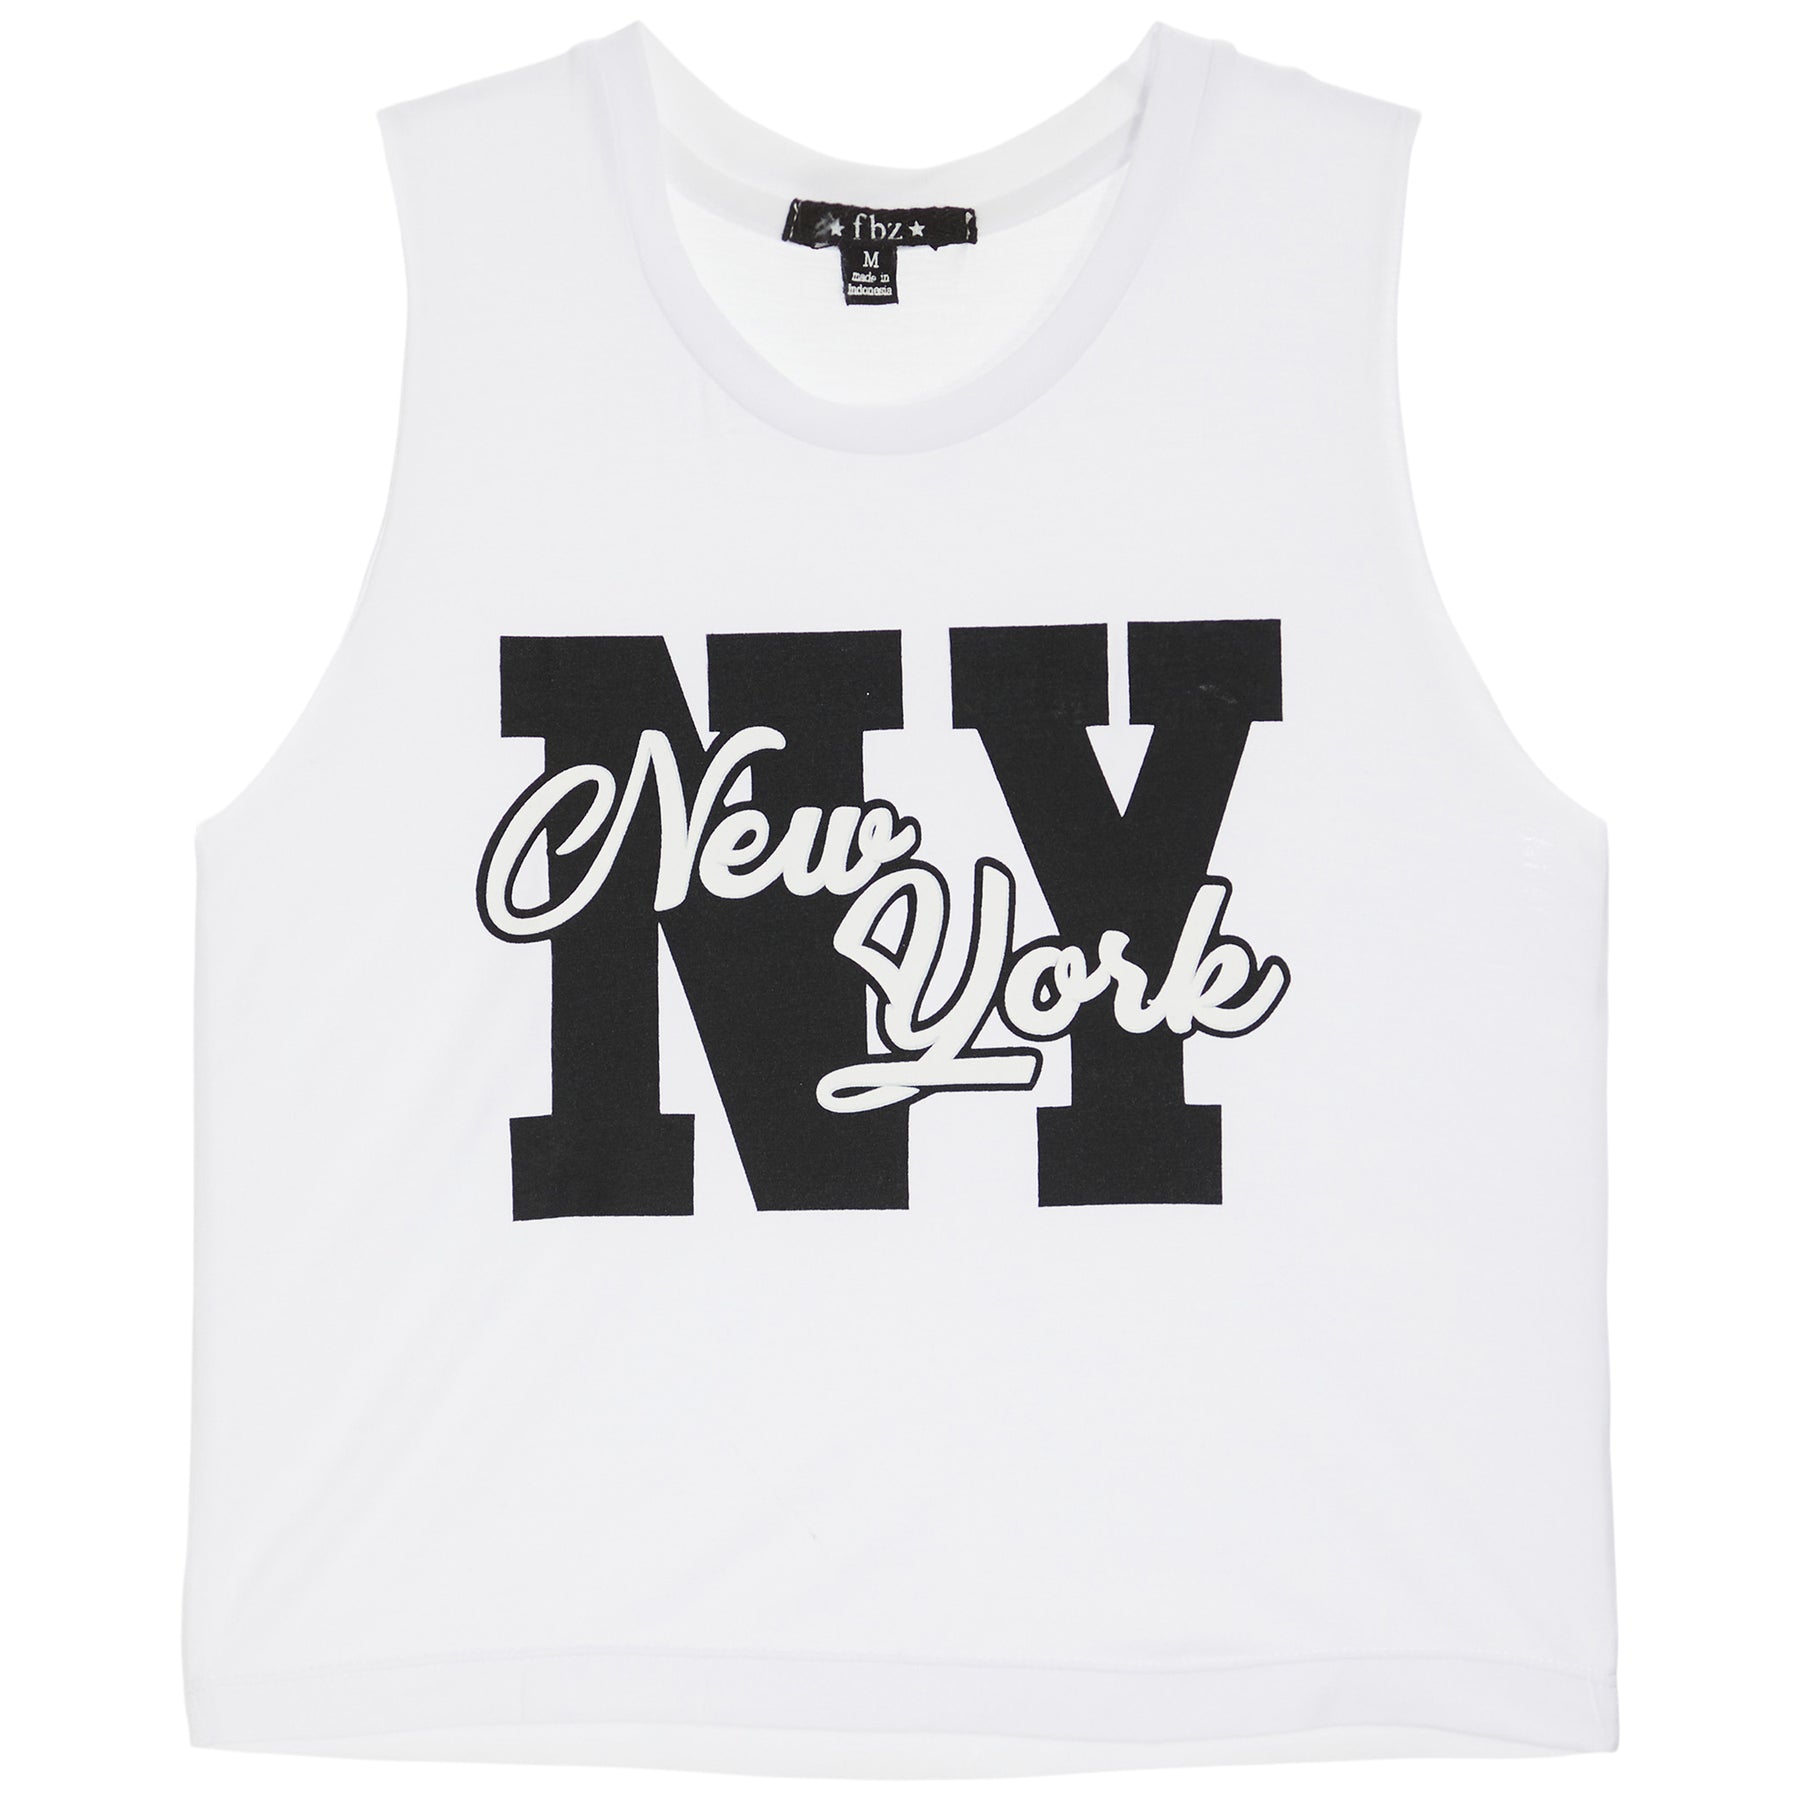 New York Tank Top